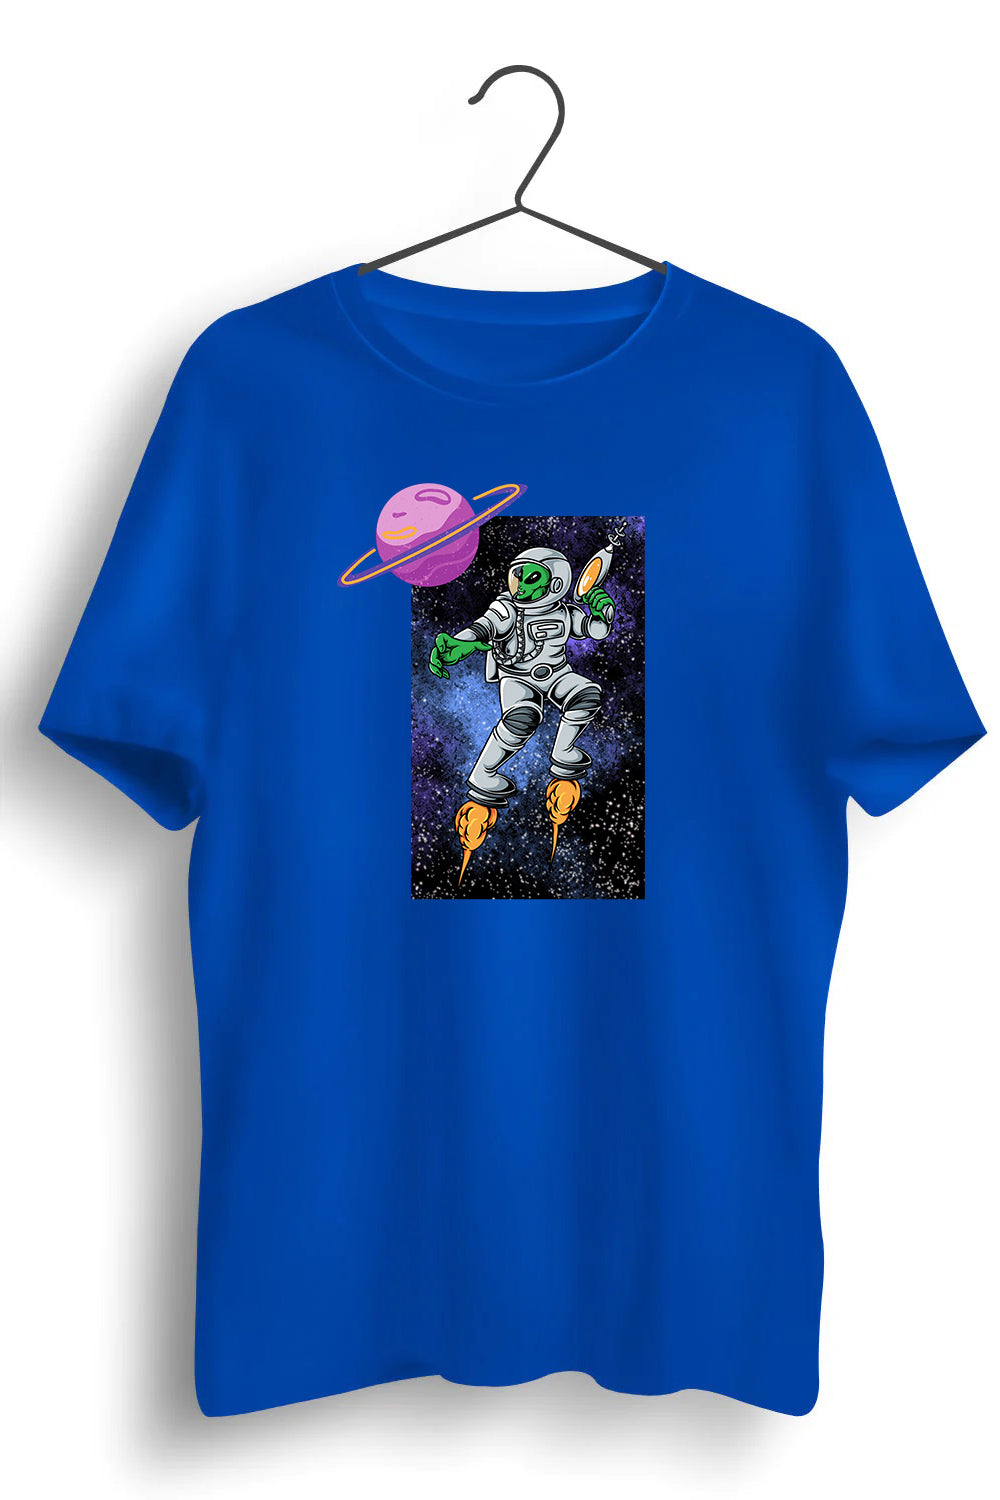 Alien In Space Suit Graphic Printed Blue Tshirt